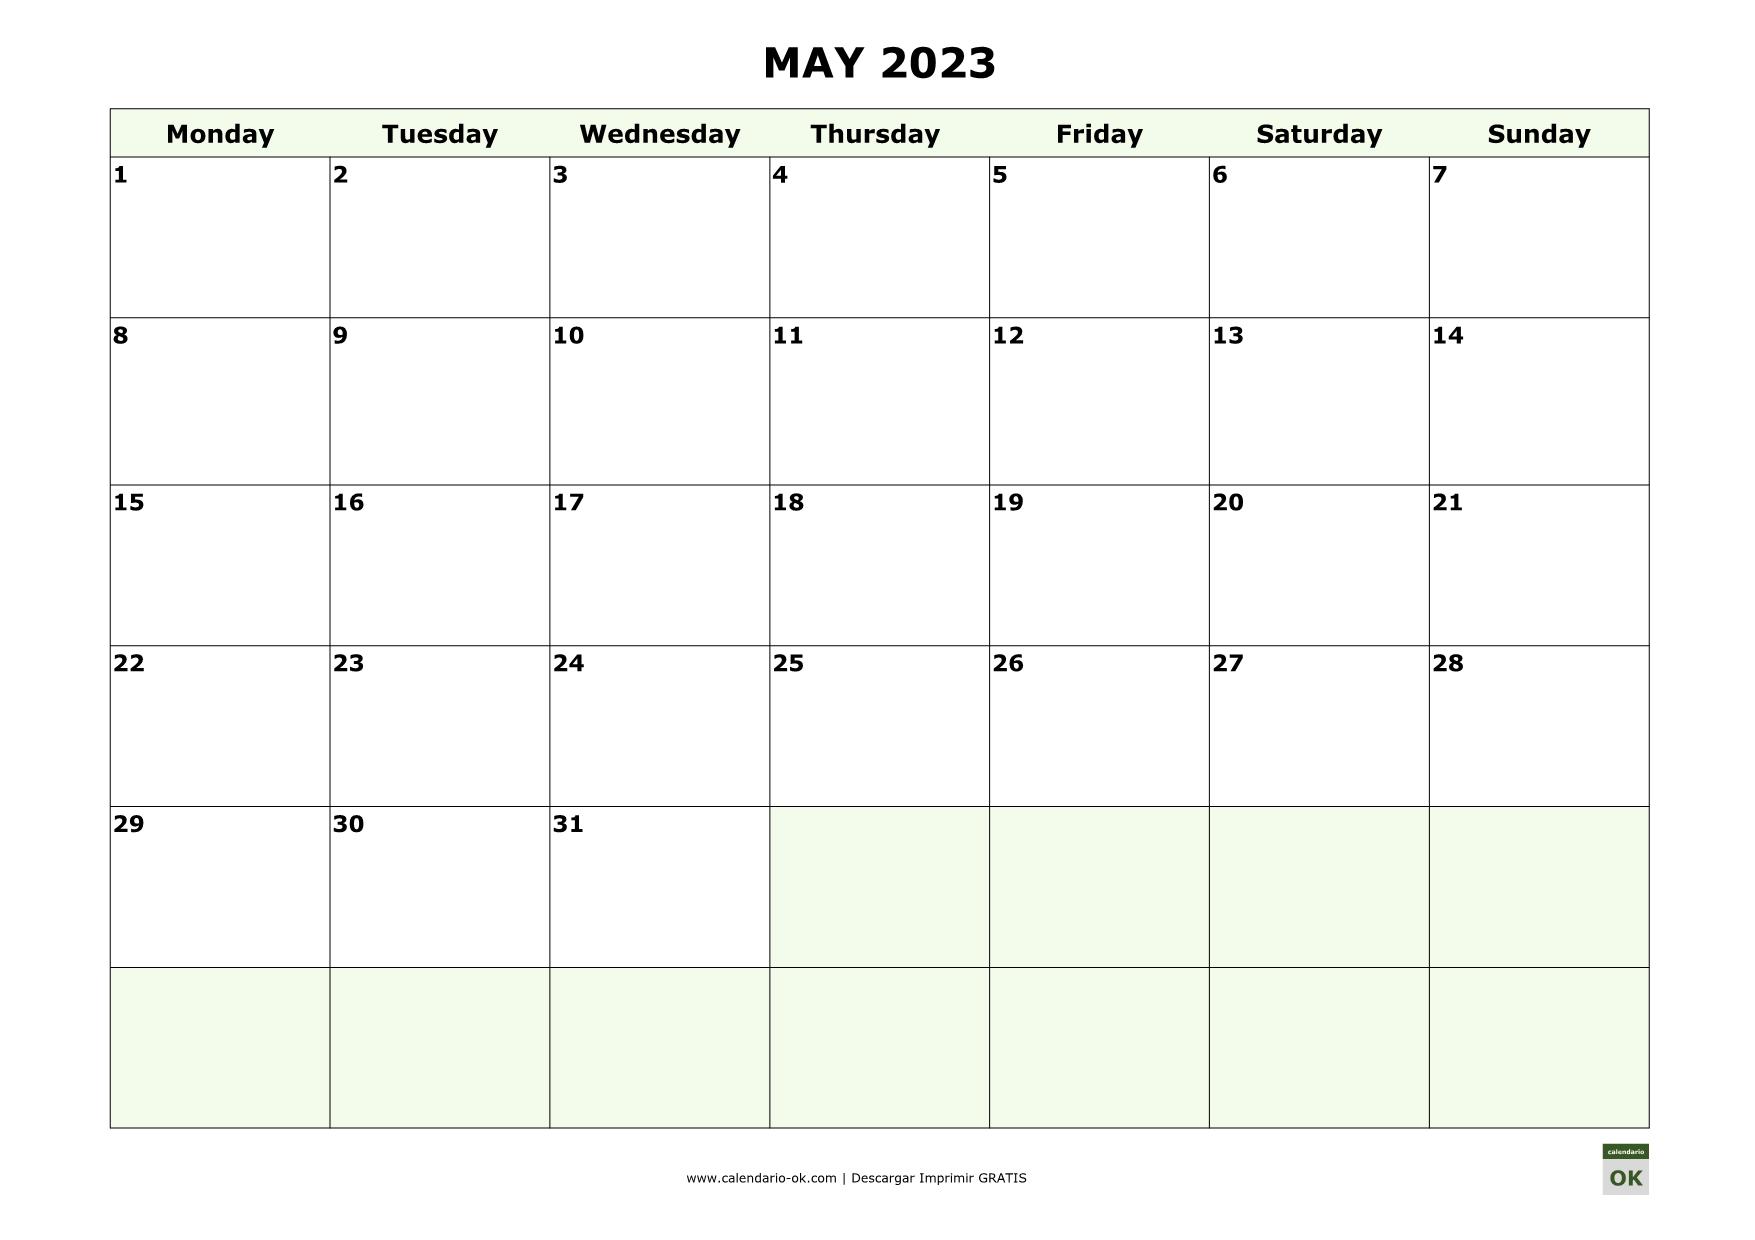 MAYO 2023 calendario en INGLES